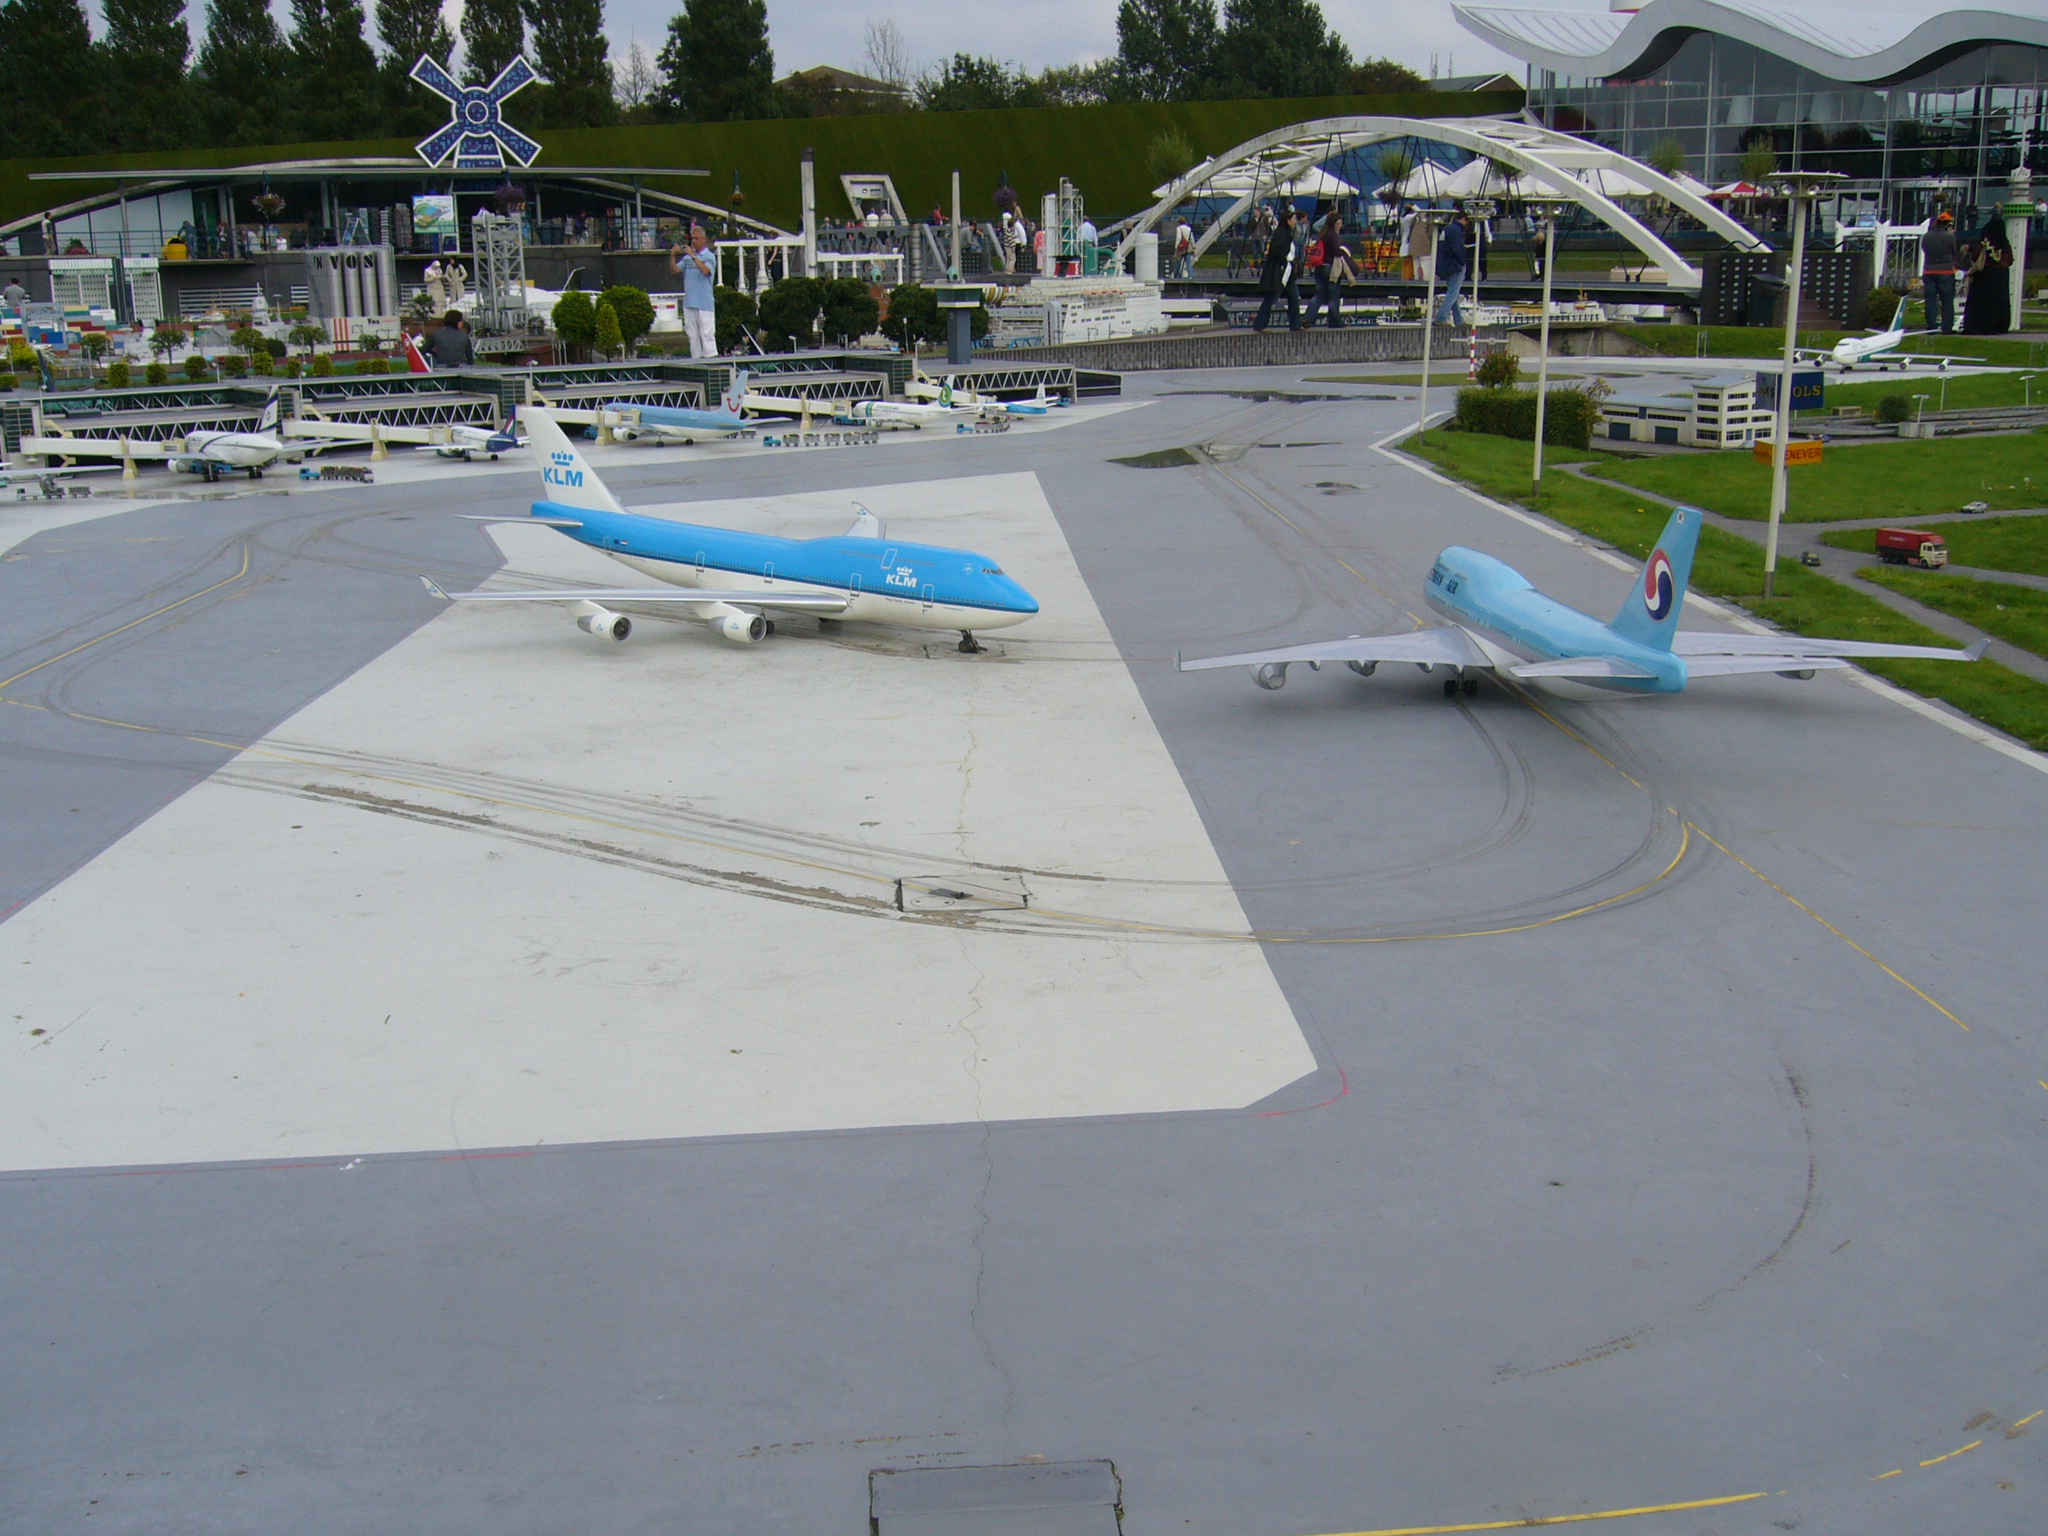 janny airport airplanes klm royal dutch airlines model village tourists madurodam schiphol